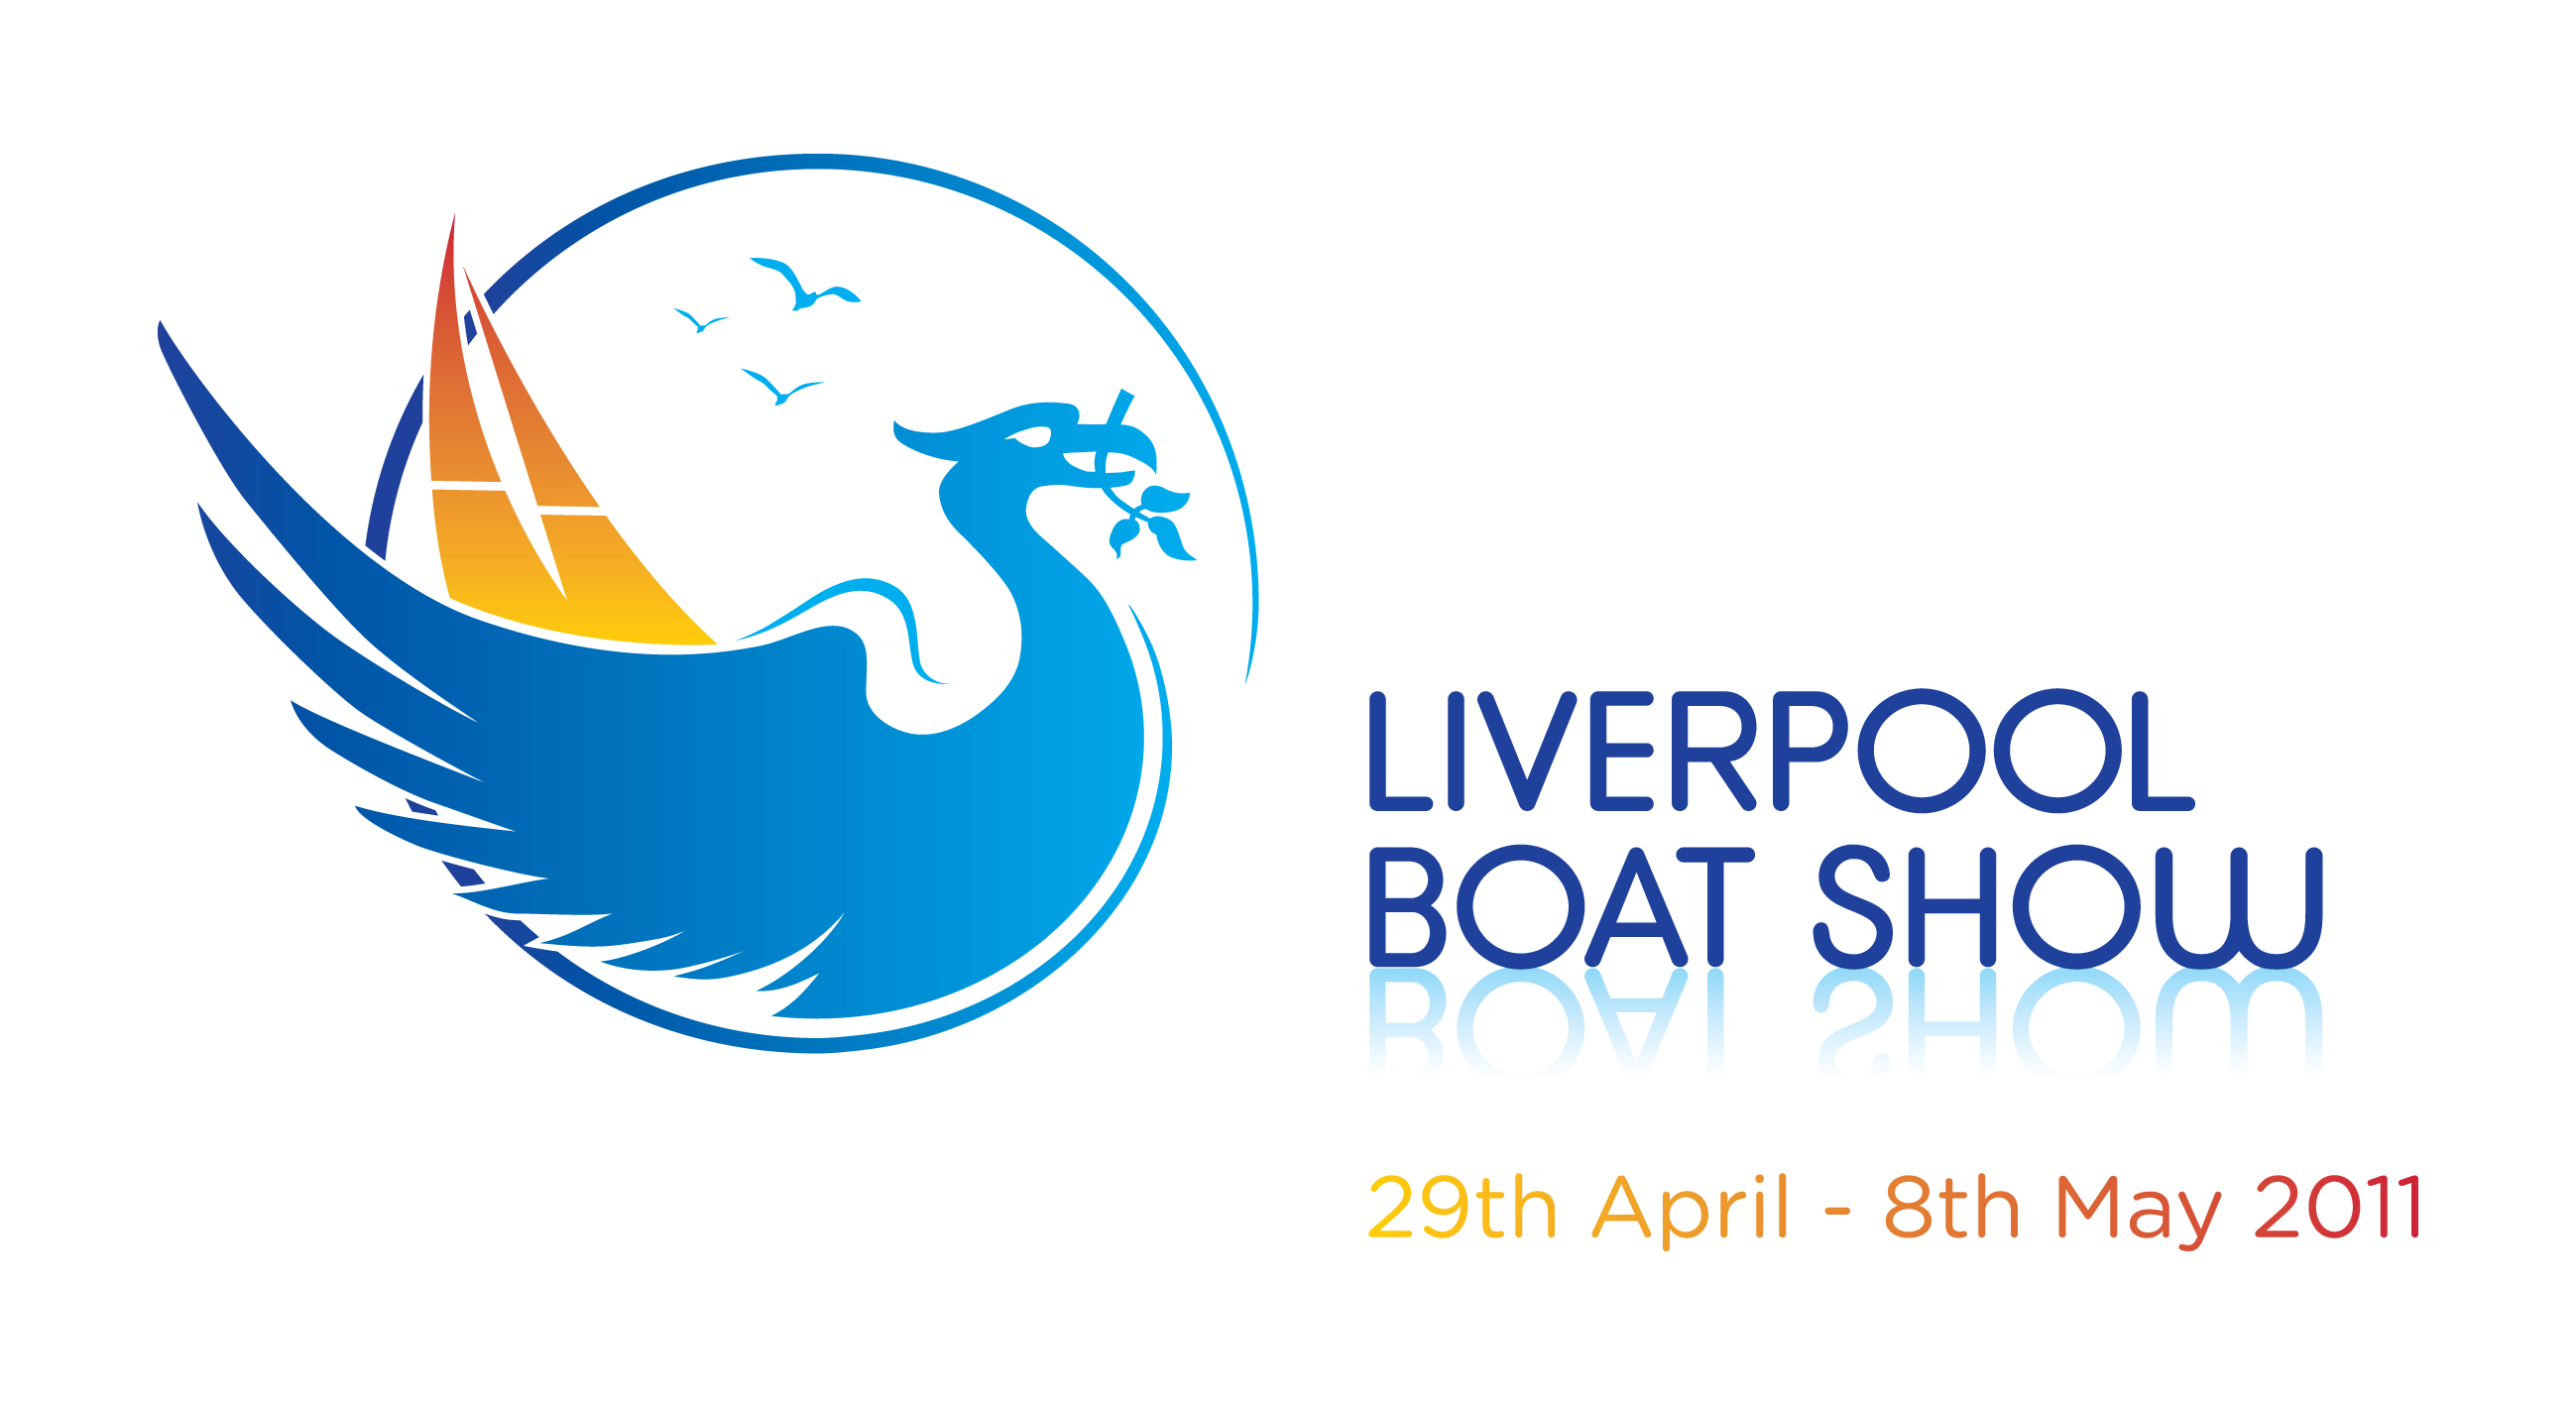 Liverpool-Boat-Show-2011-Logo.jpg